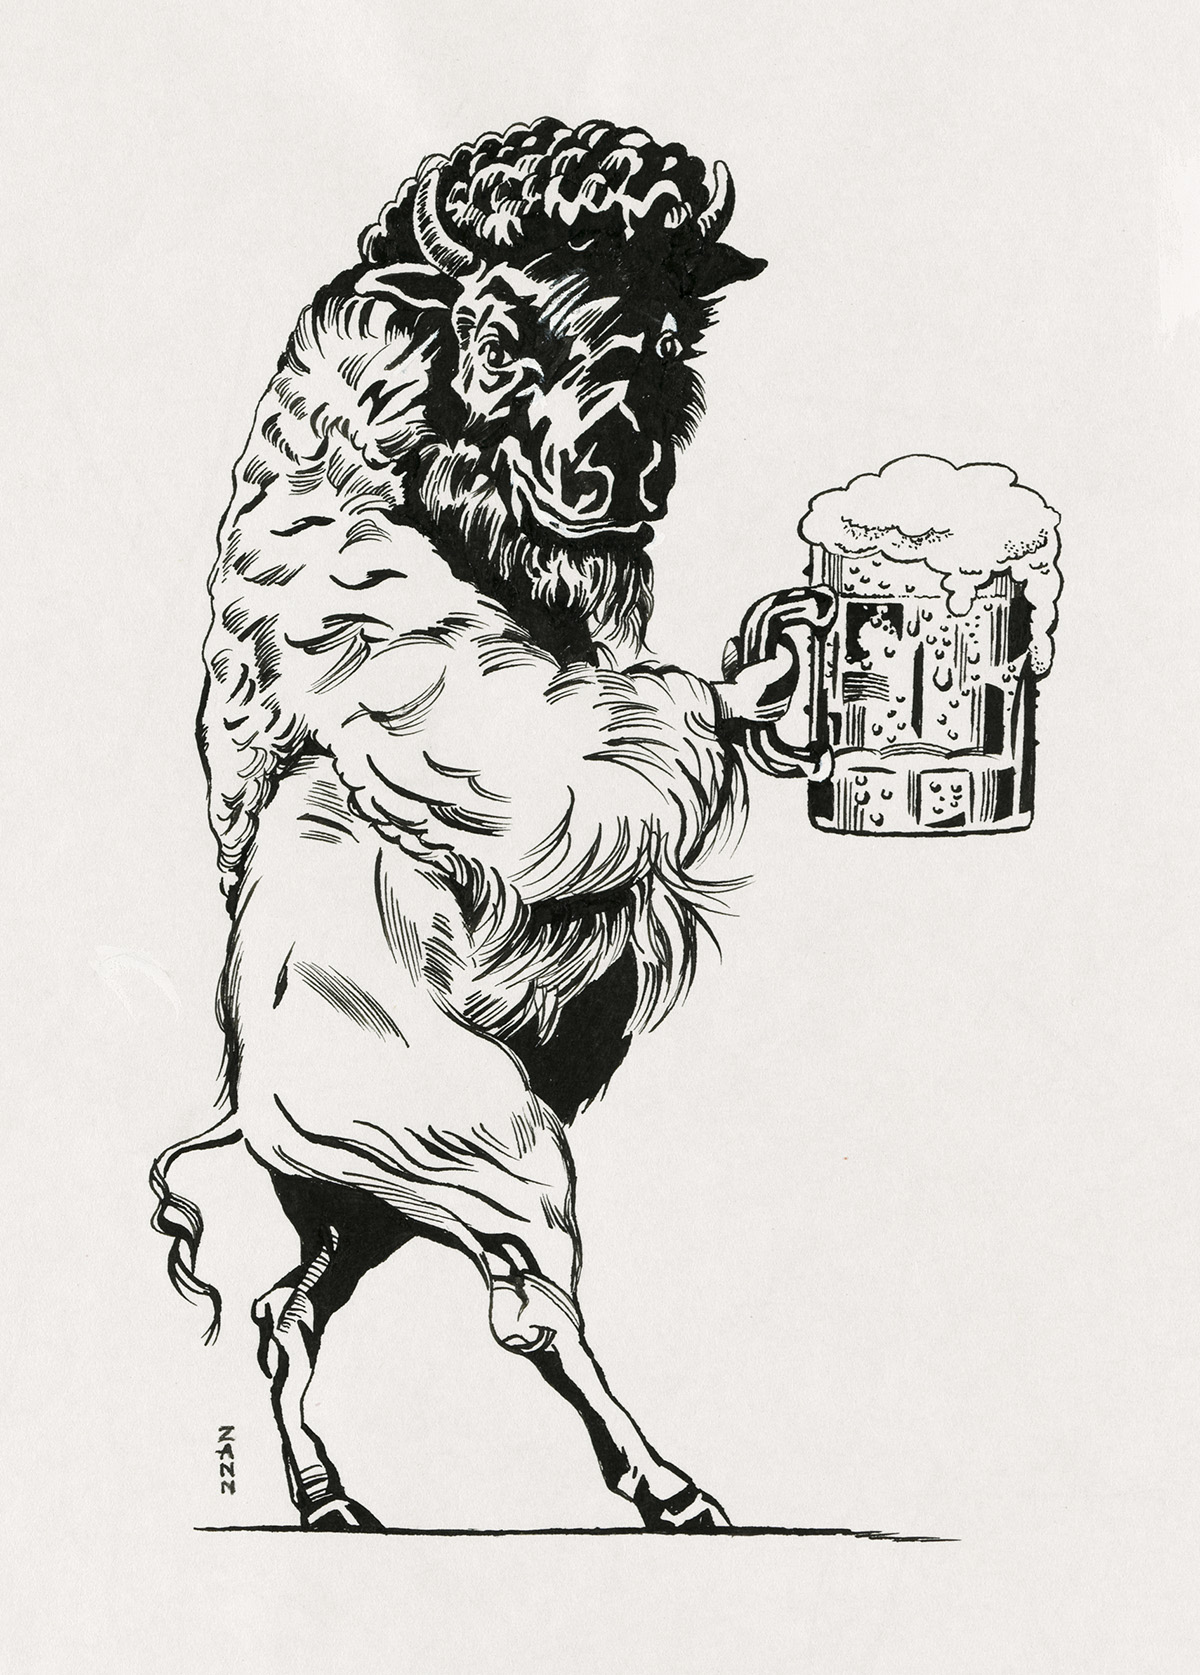 ADVERTISING BEER NICKY ZANN. Beer Bison.